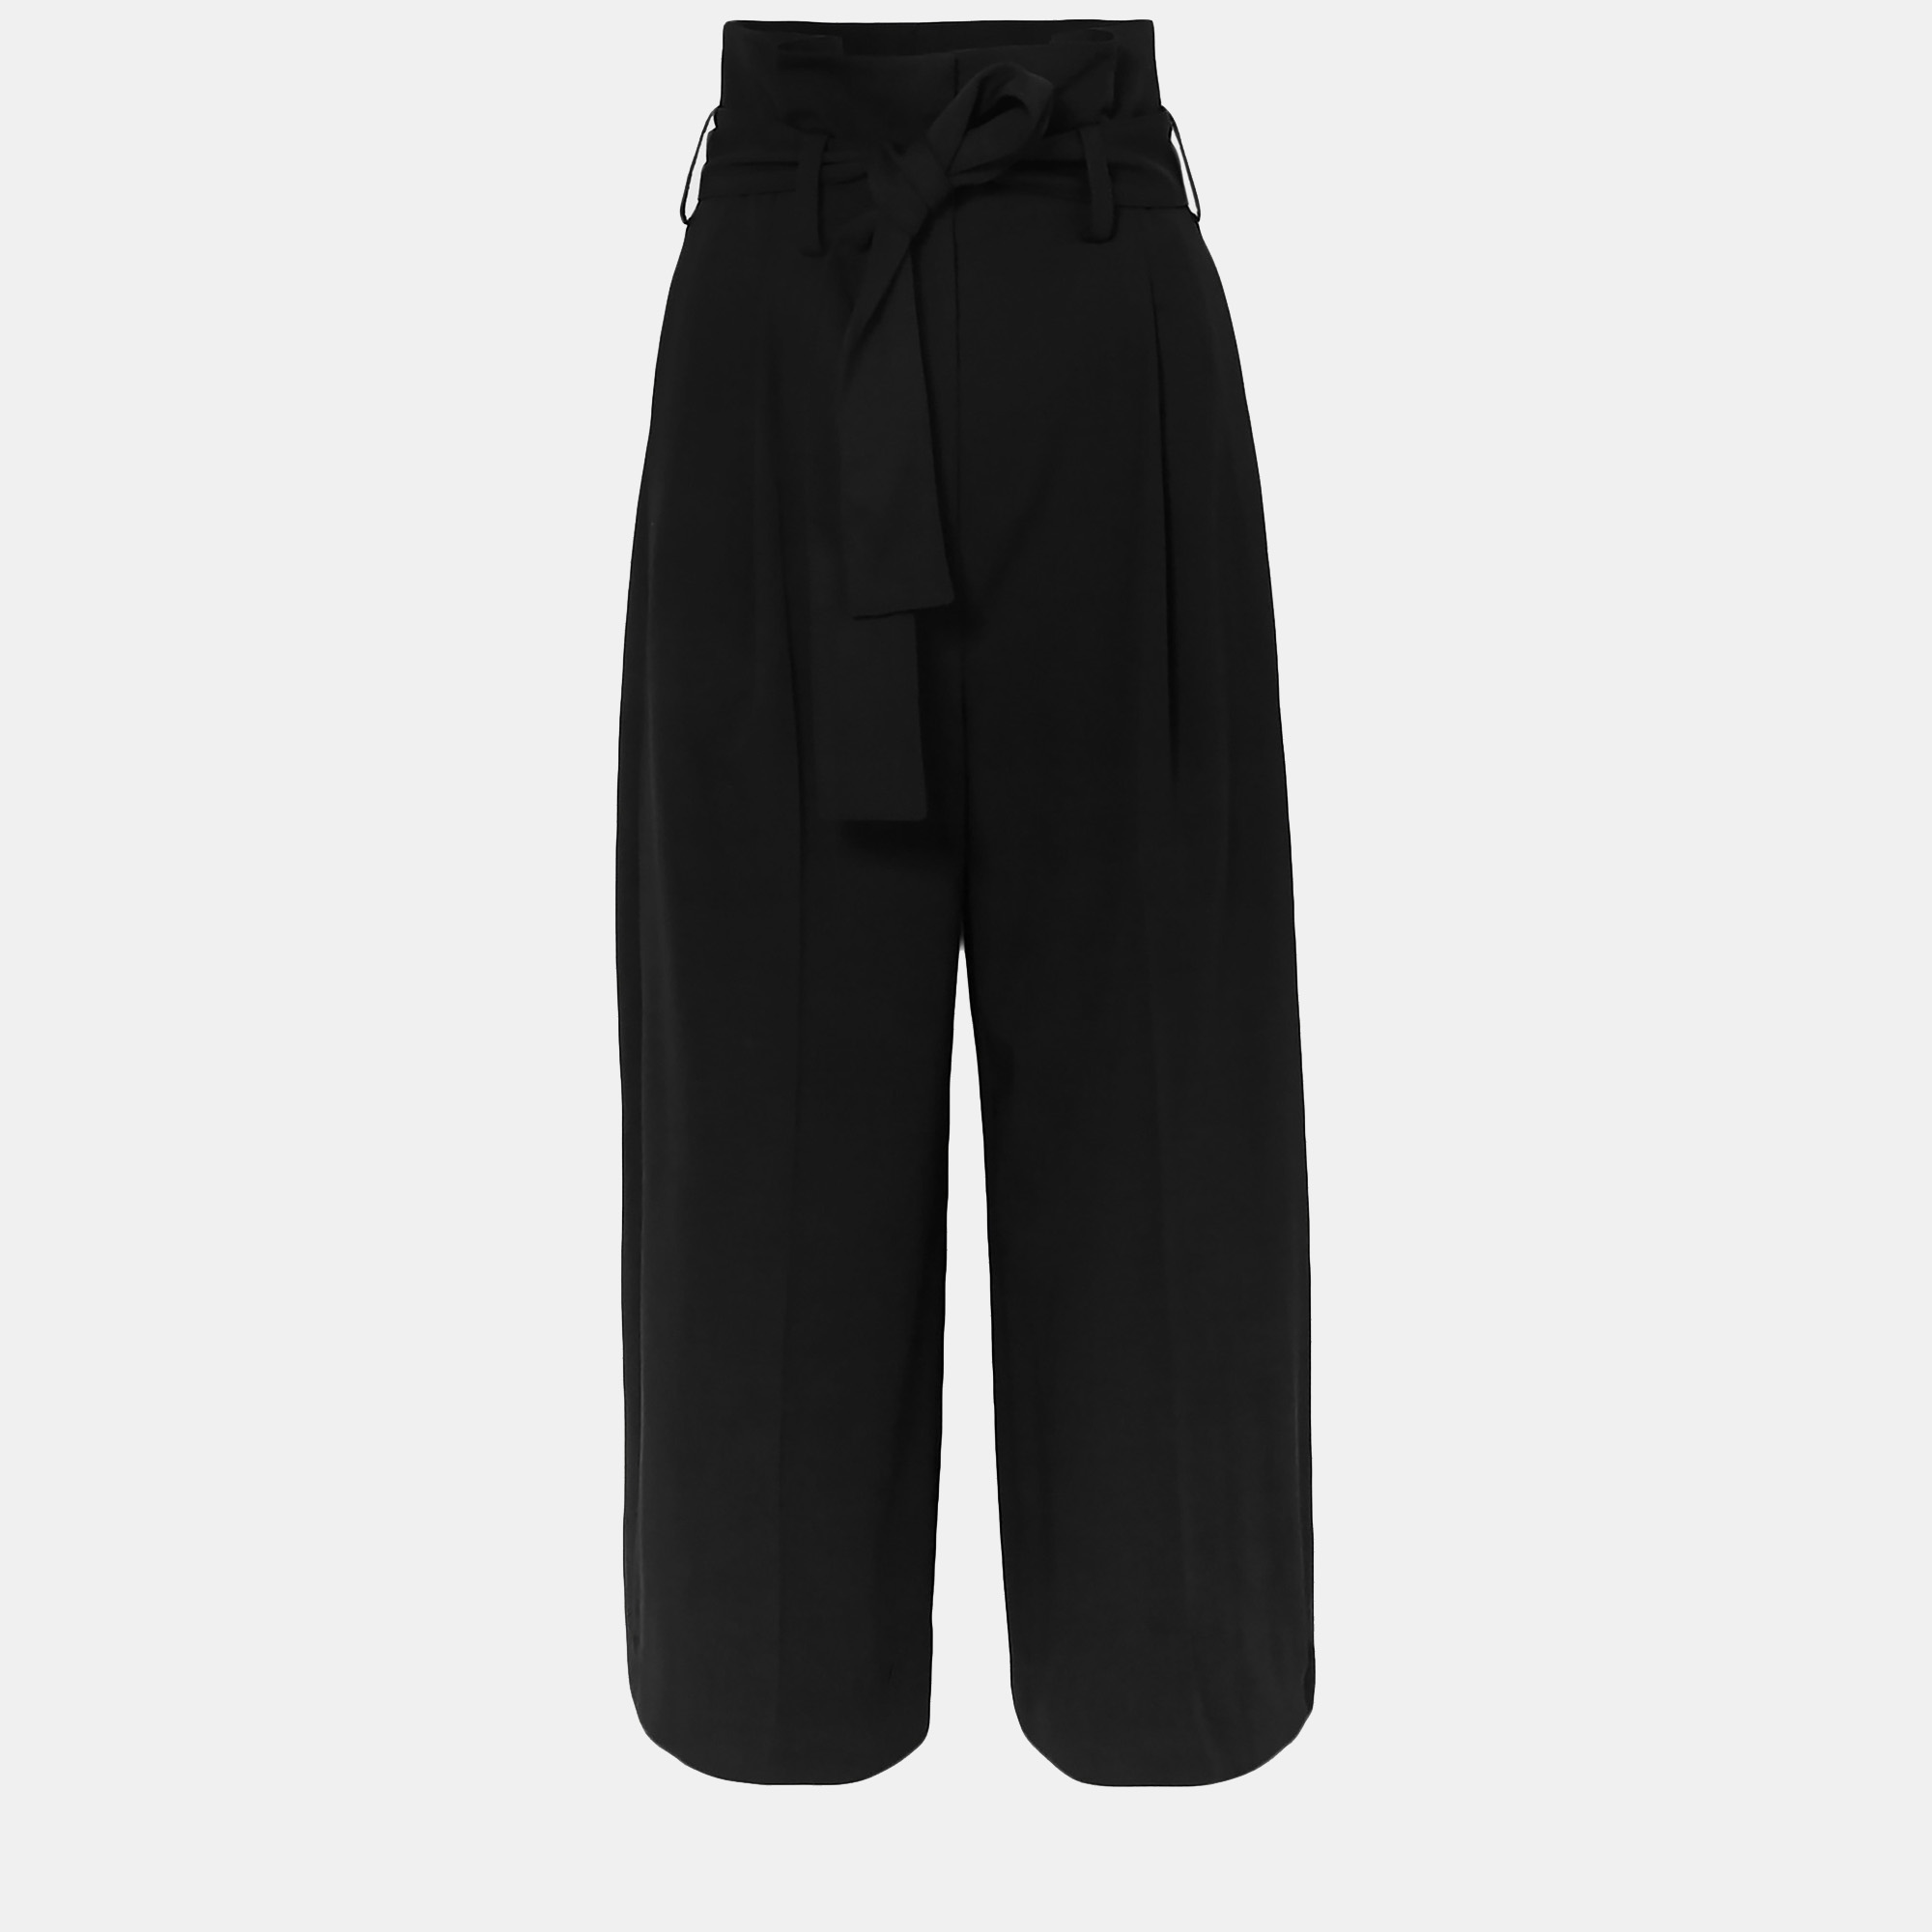 Stella mccartney black wool wide leg pants 2xl (it 48)